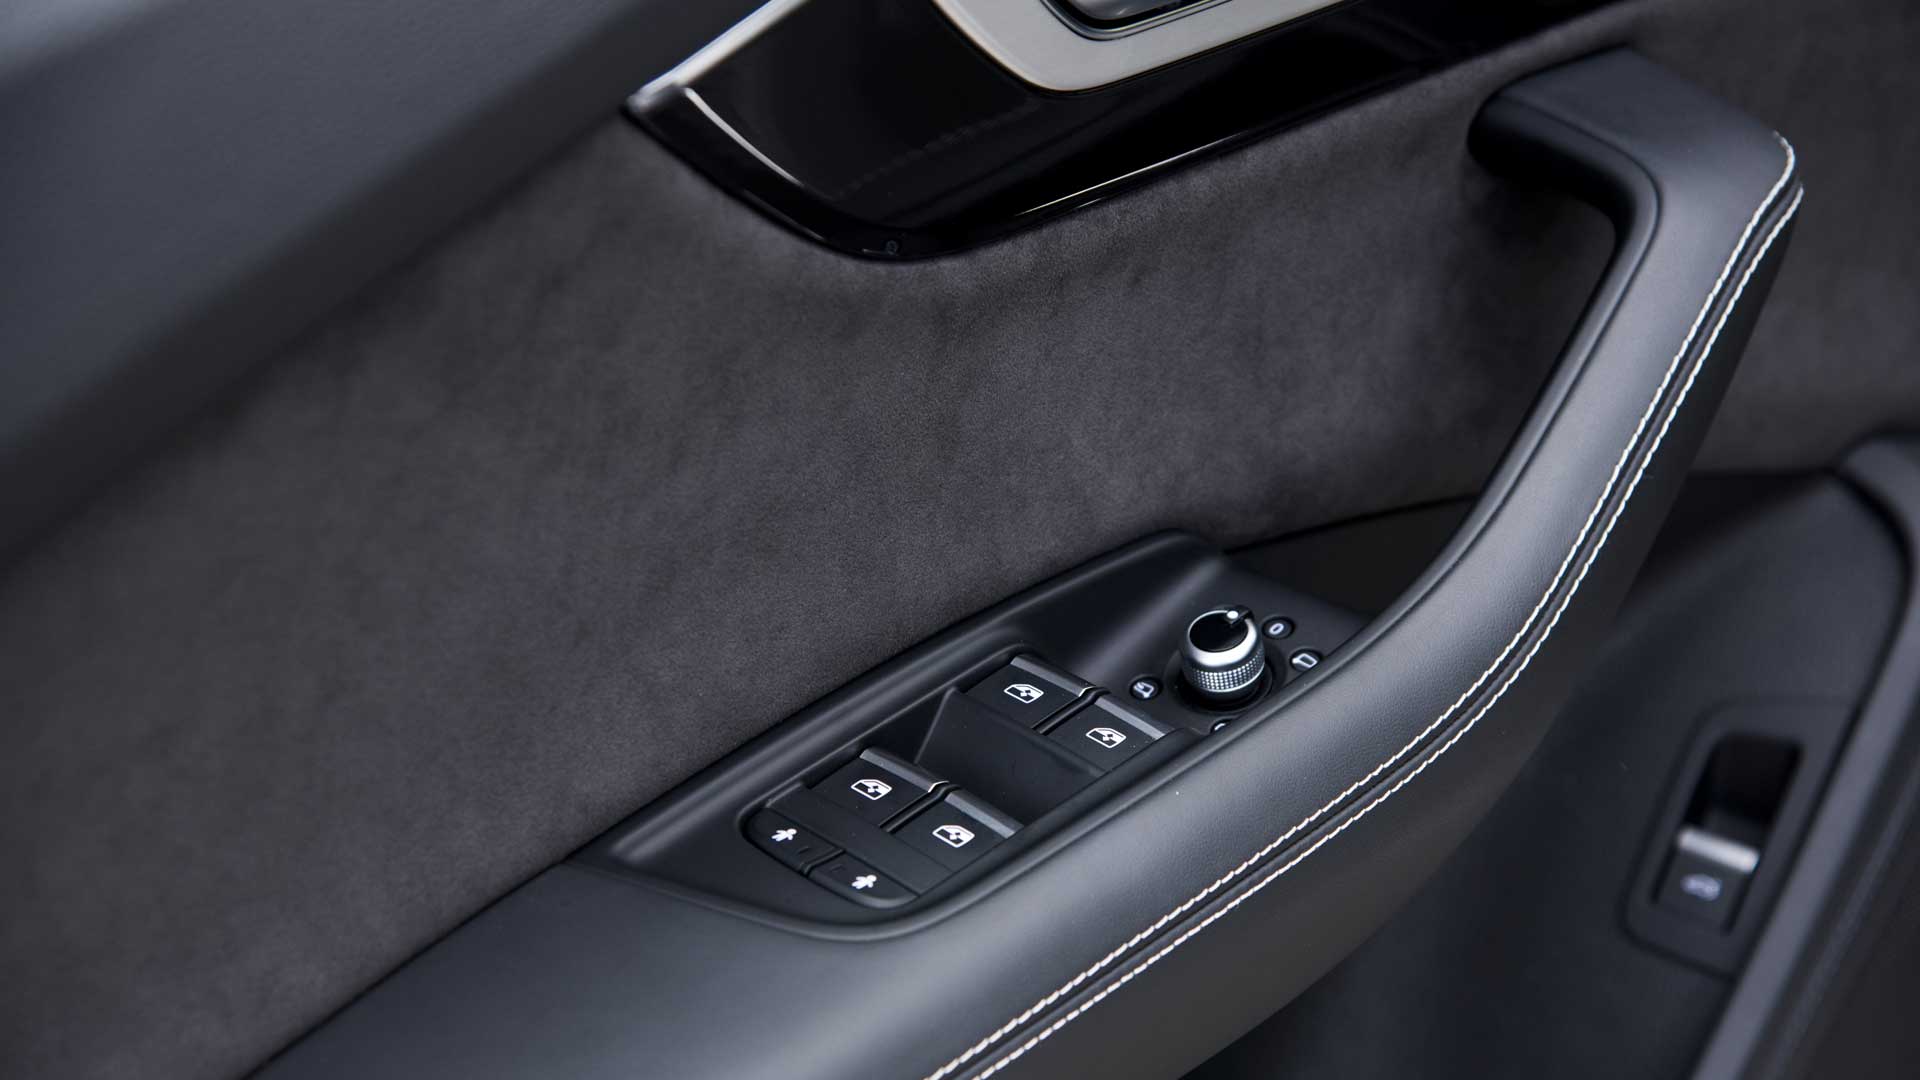 Audi Q7 2016 Technology Interior